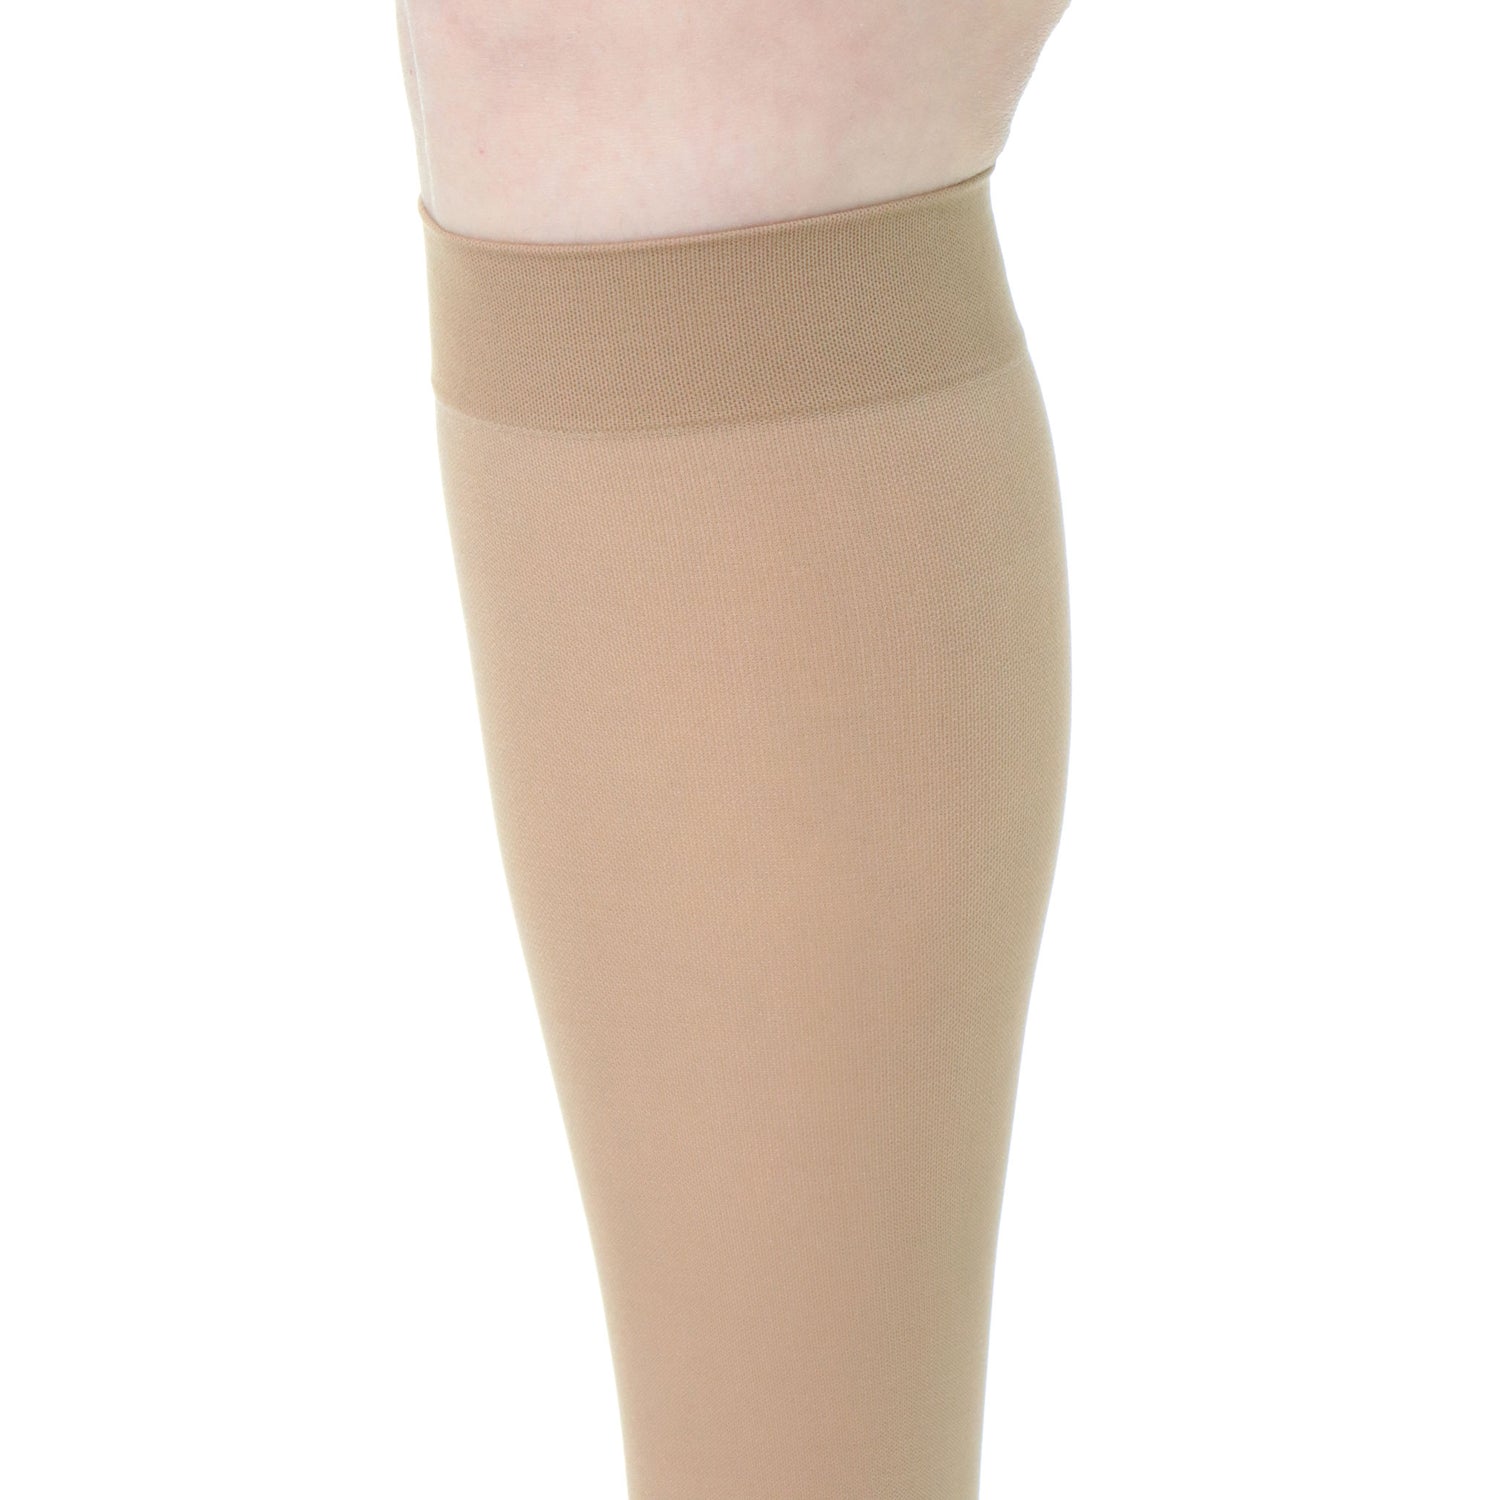 Compression Socks 20-30 mmhg Varicose Veins Socks Medical